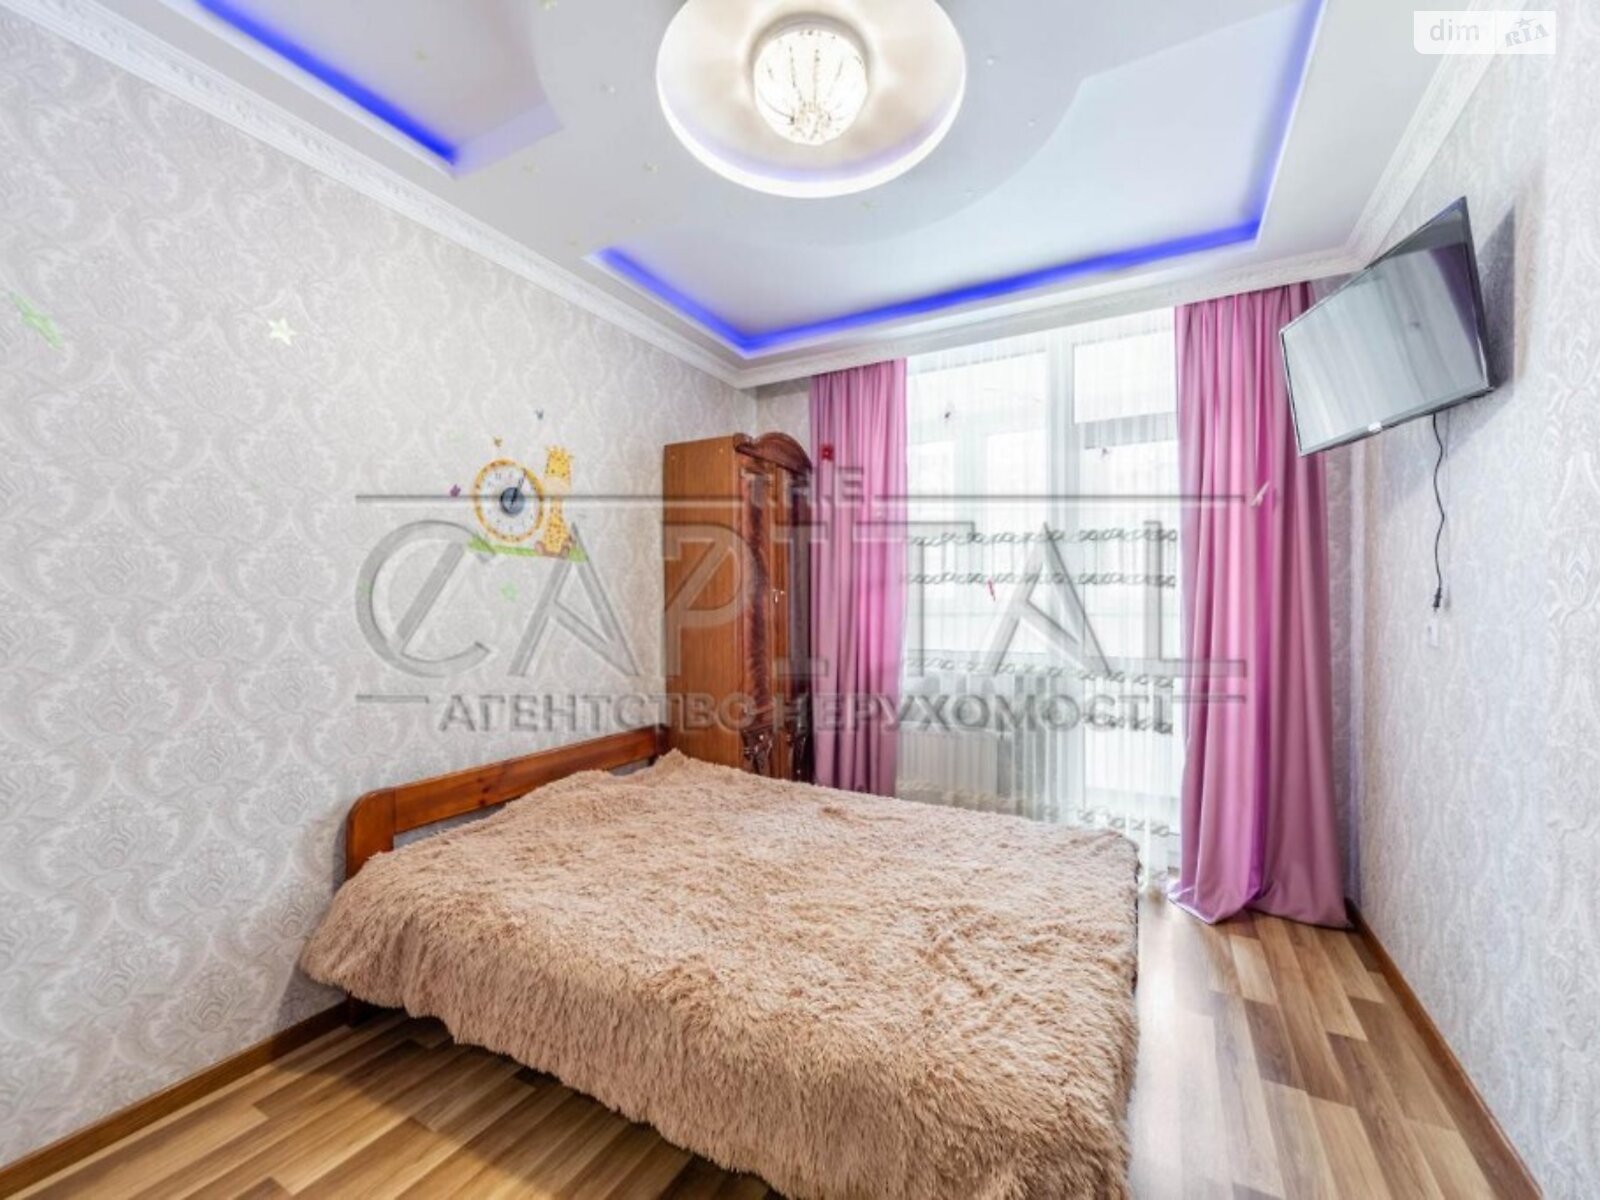 Продажа трехкомнатной квартиры в Киеве, на ул. Драгоманова 2Б, район Дарницкий фото 1